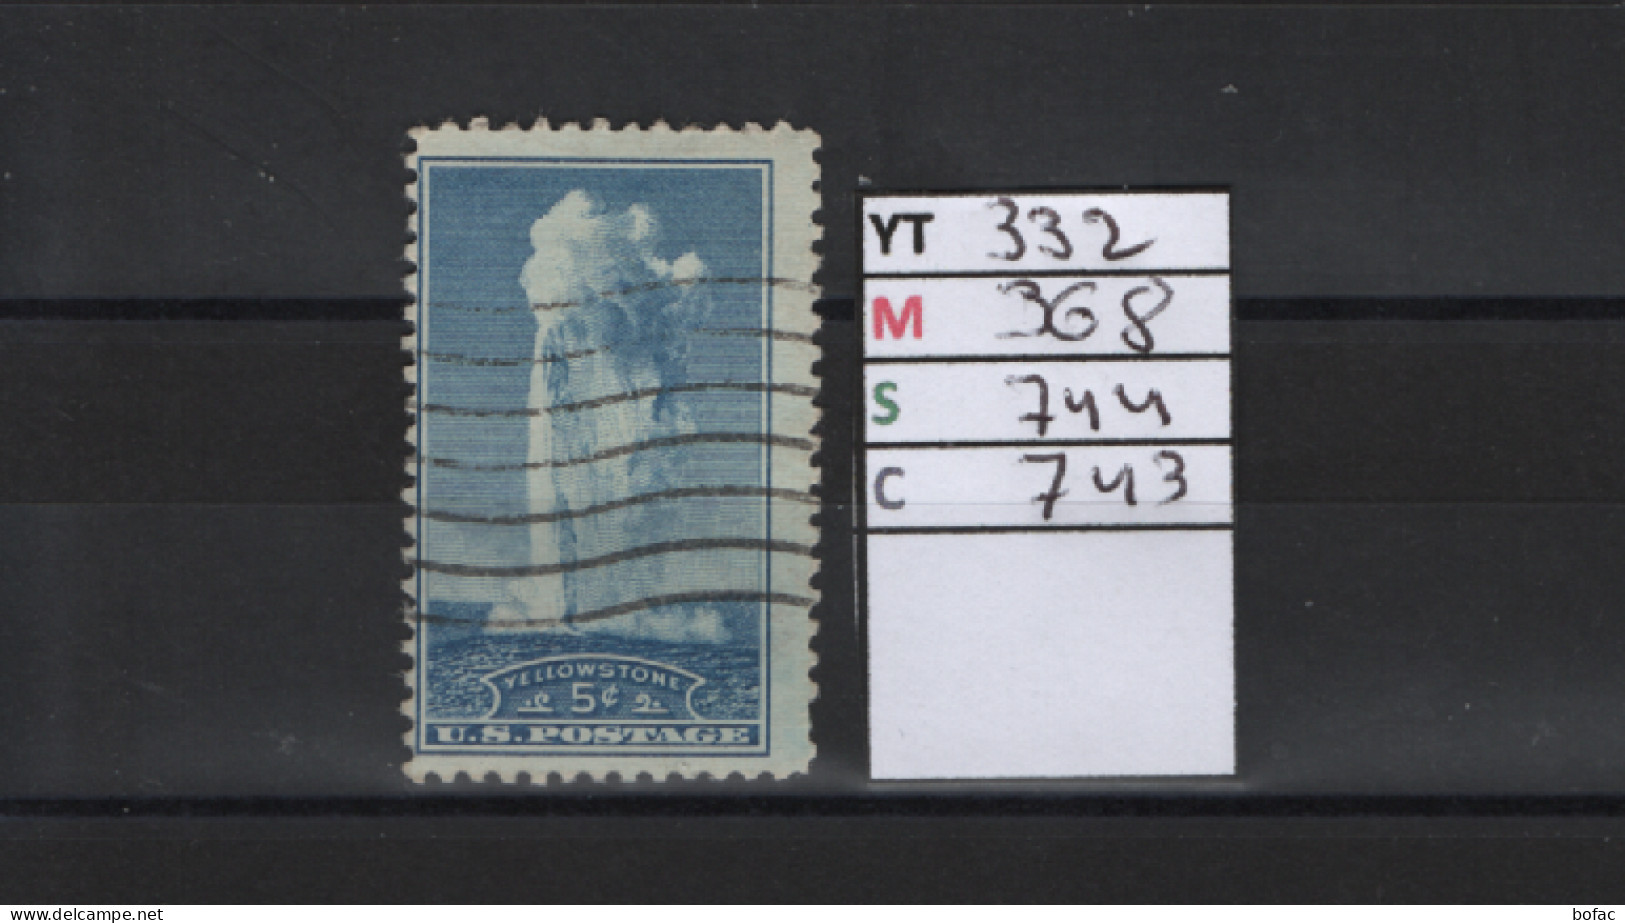 PRIX FIXE Obl 332 YT 368 MIC 744 SCSOT 743 GIB Geyser Wyoming 1934 Etats Unis 58A/01 - Usados